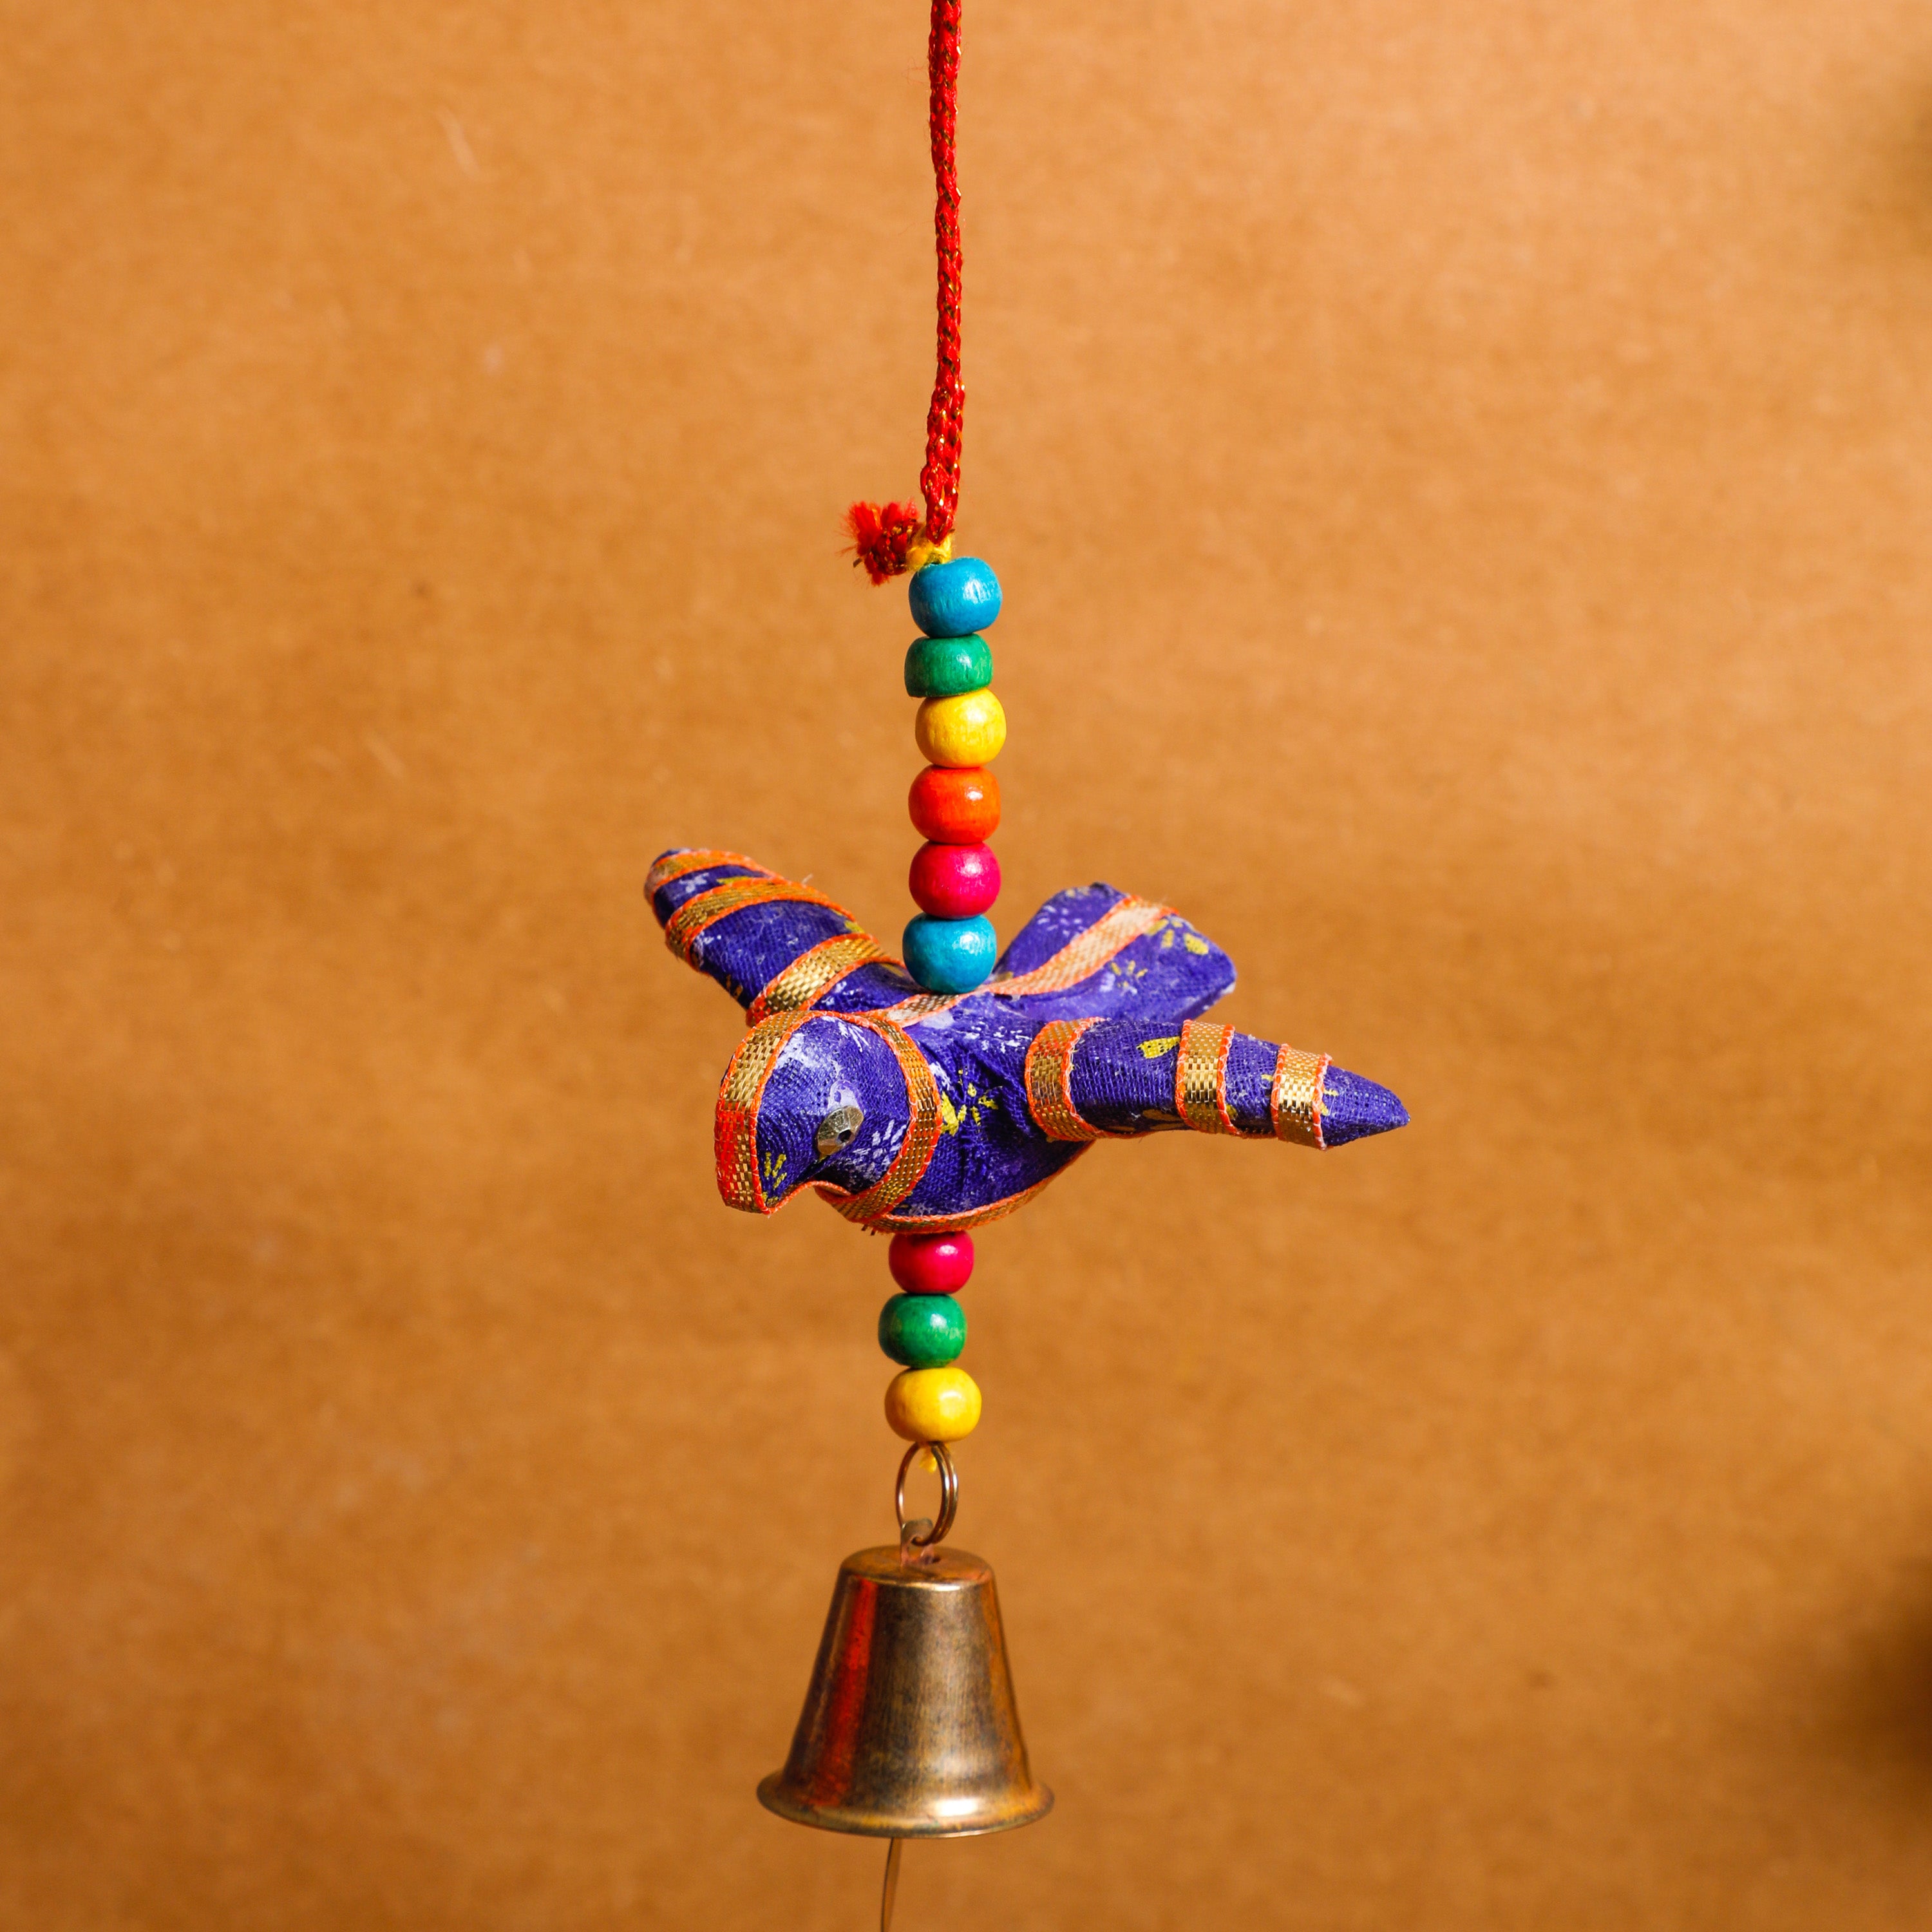 Fabric and beads made prospertiy hanging